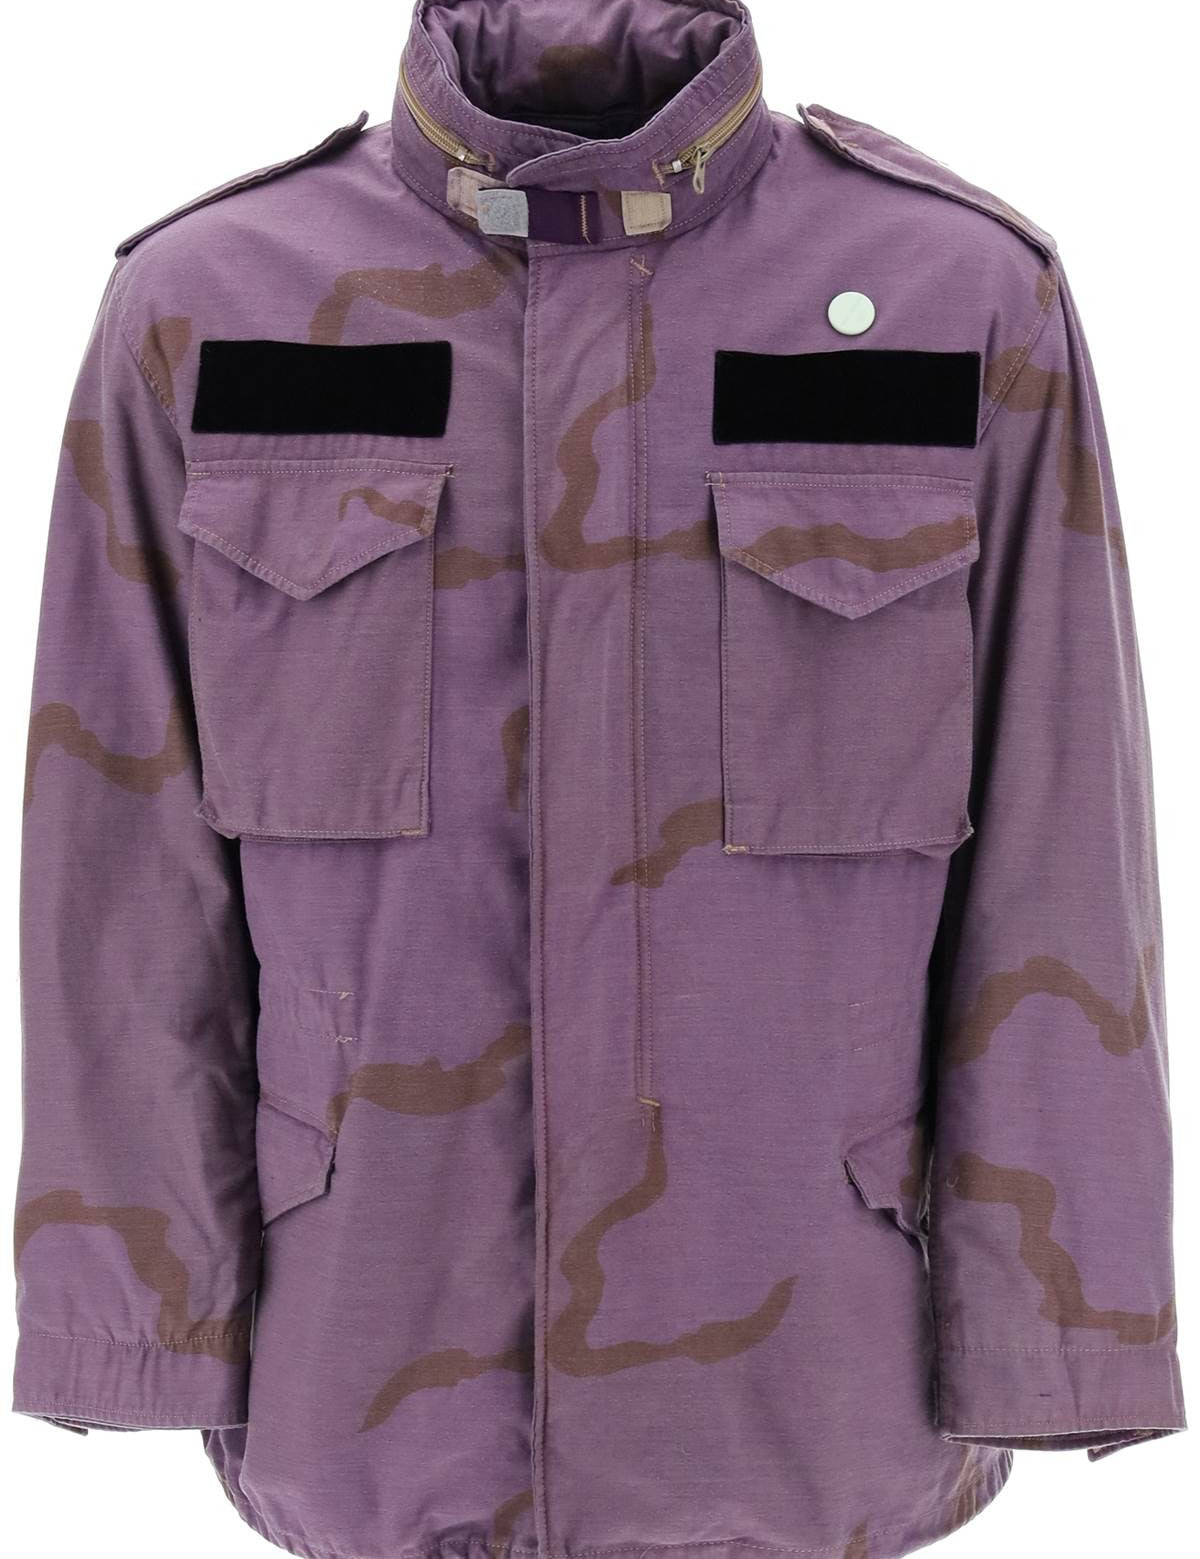 oamc-field-jacket-in-cotton-with-camouflage-pattern.jpg